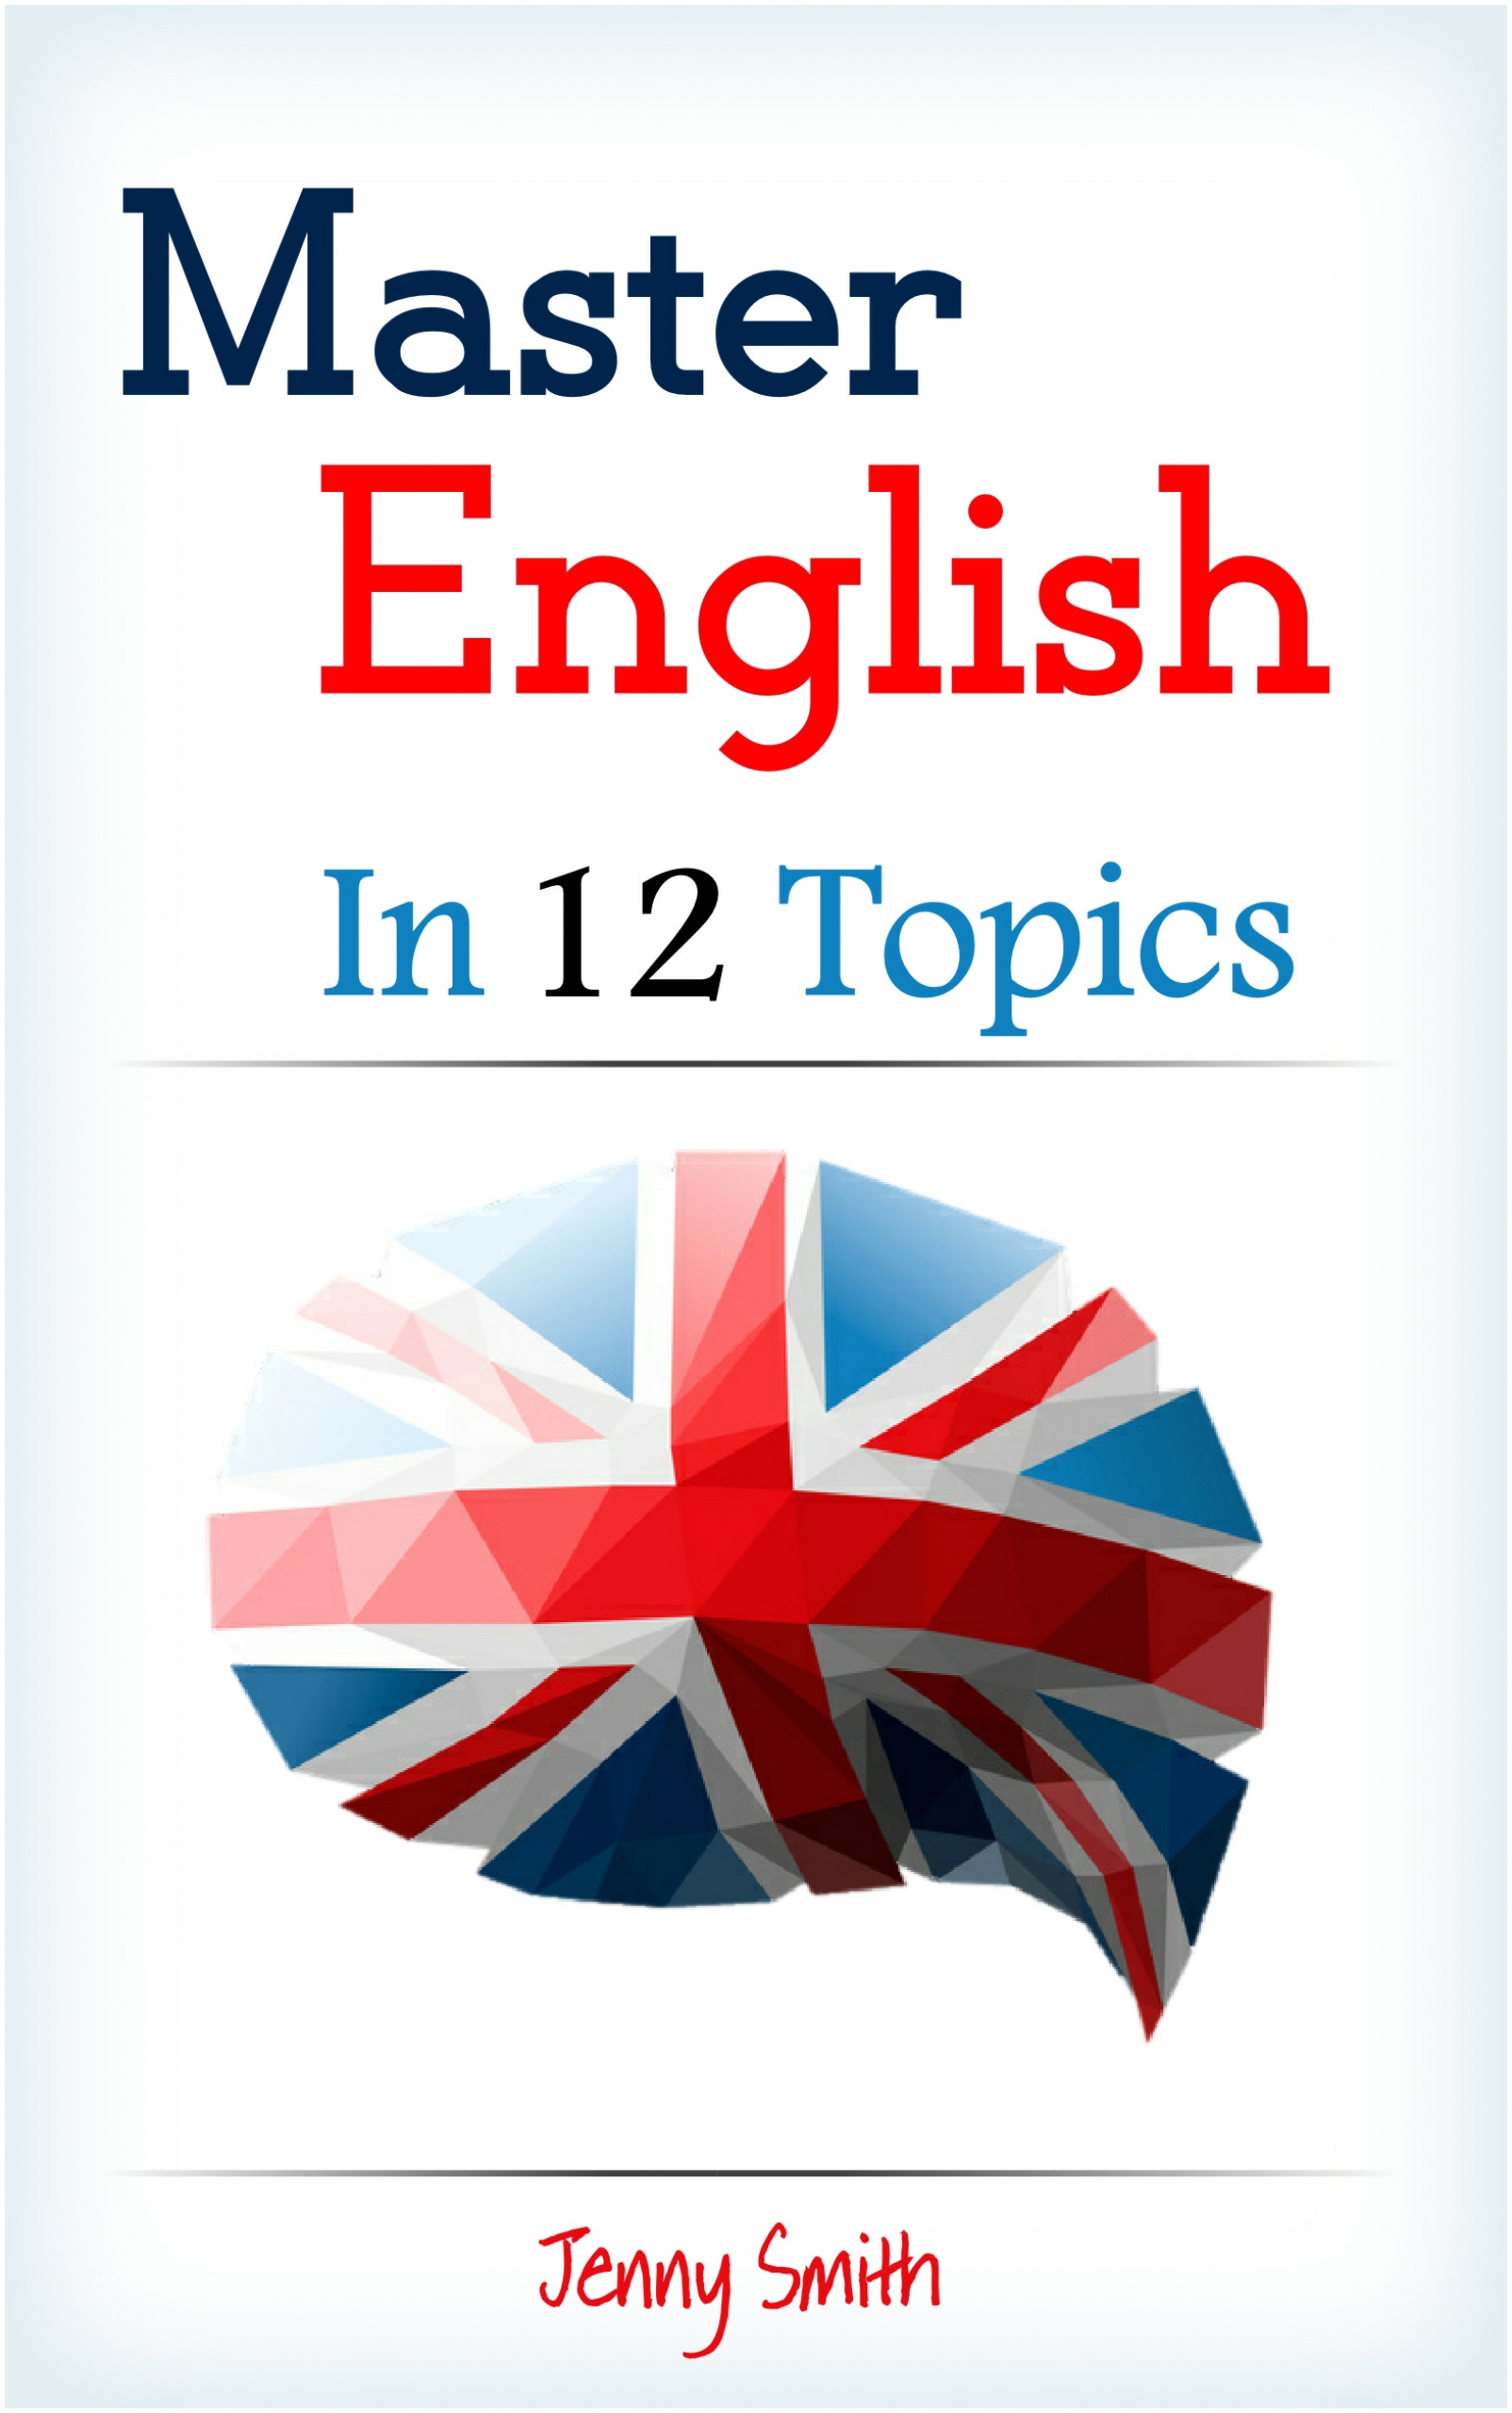 Master English in 12 Topics